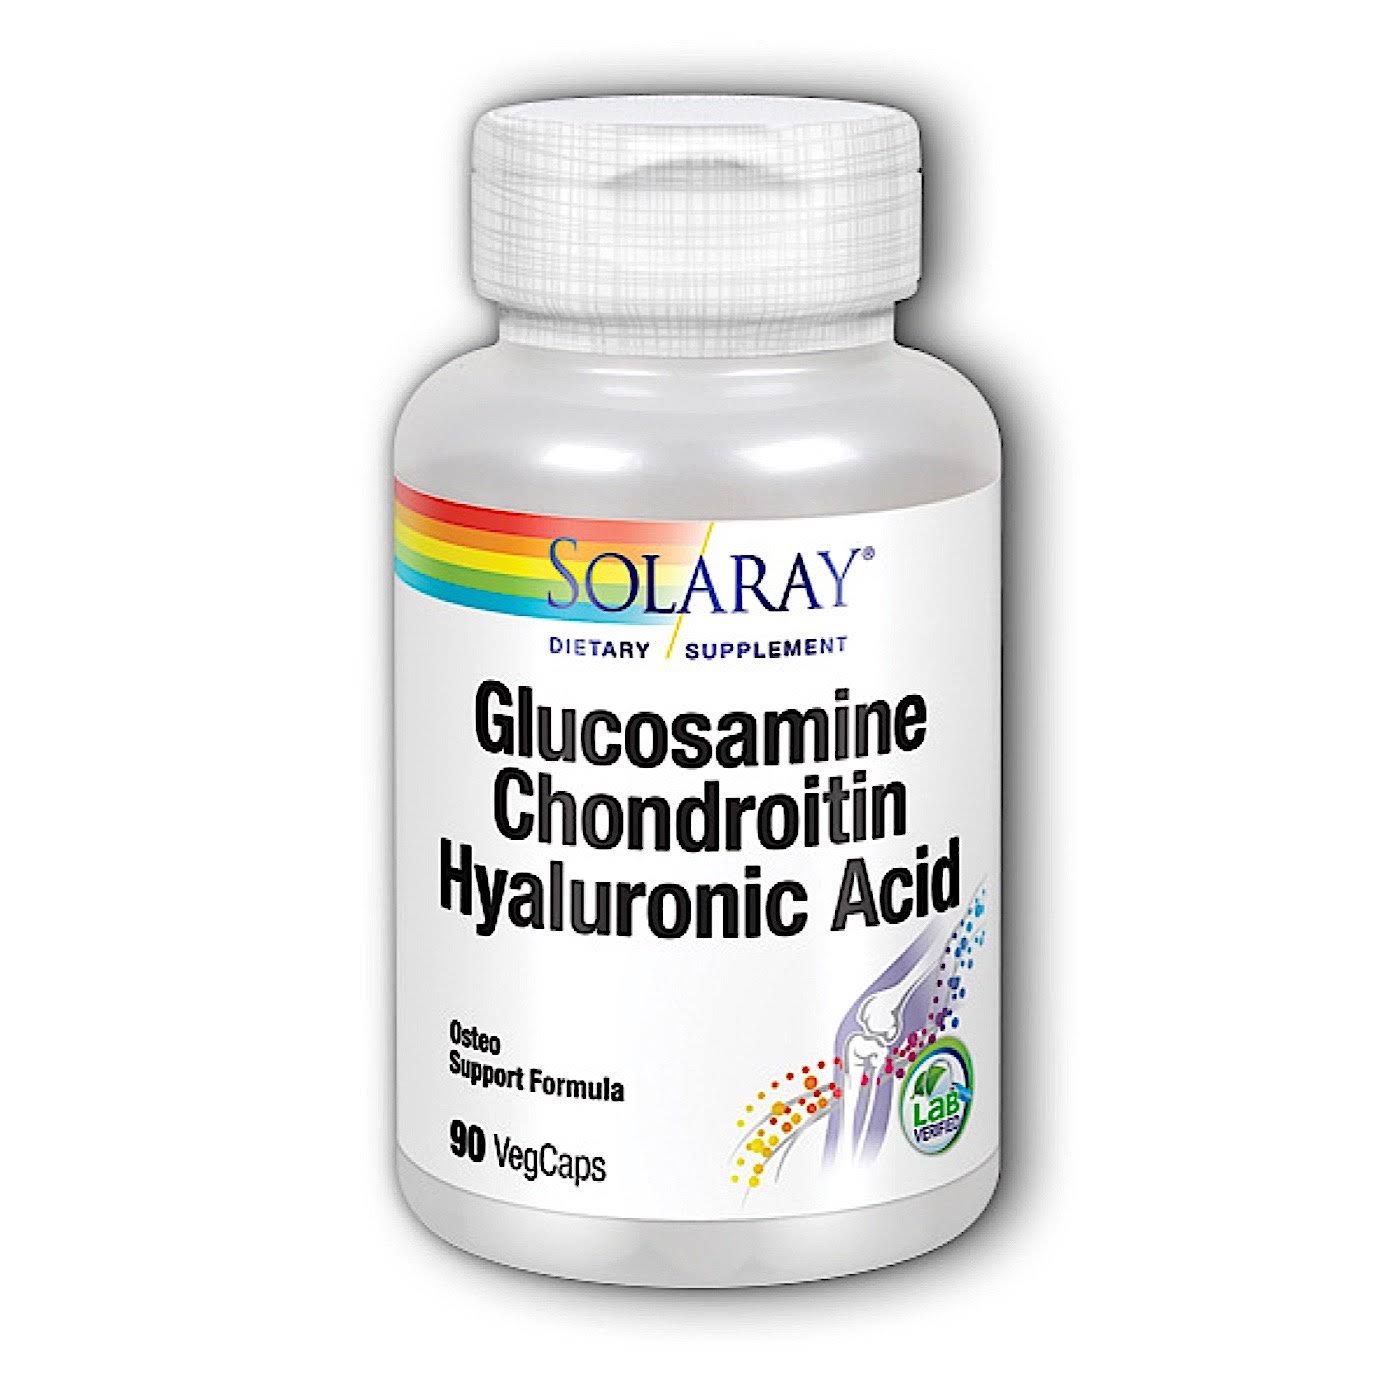 Solaray Glucosamine Chondroitin Hyaluronic Acid Dietary Supplement - 90ct